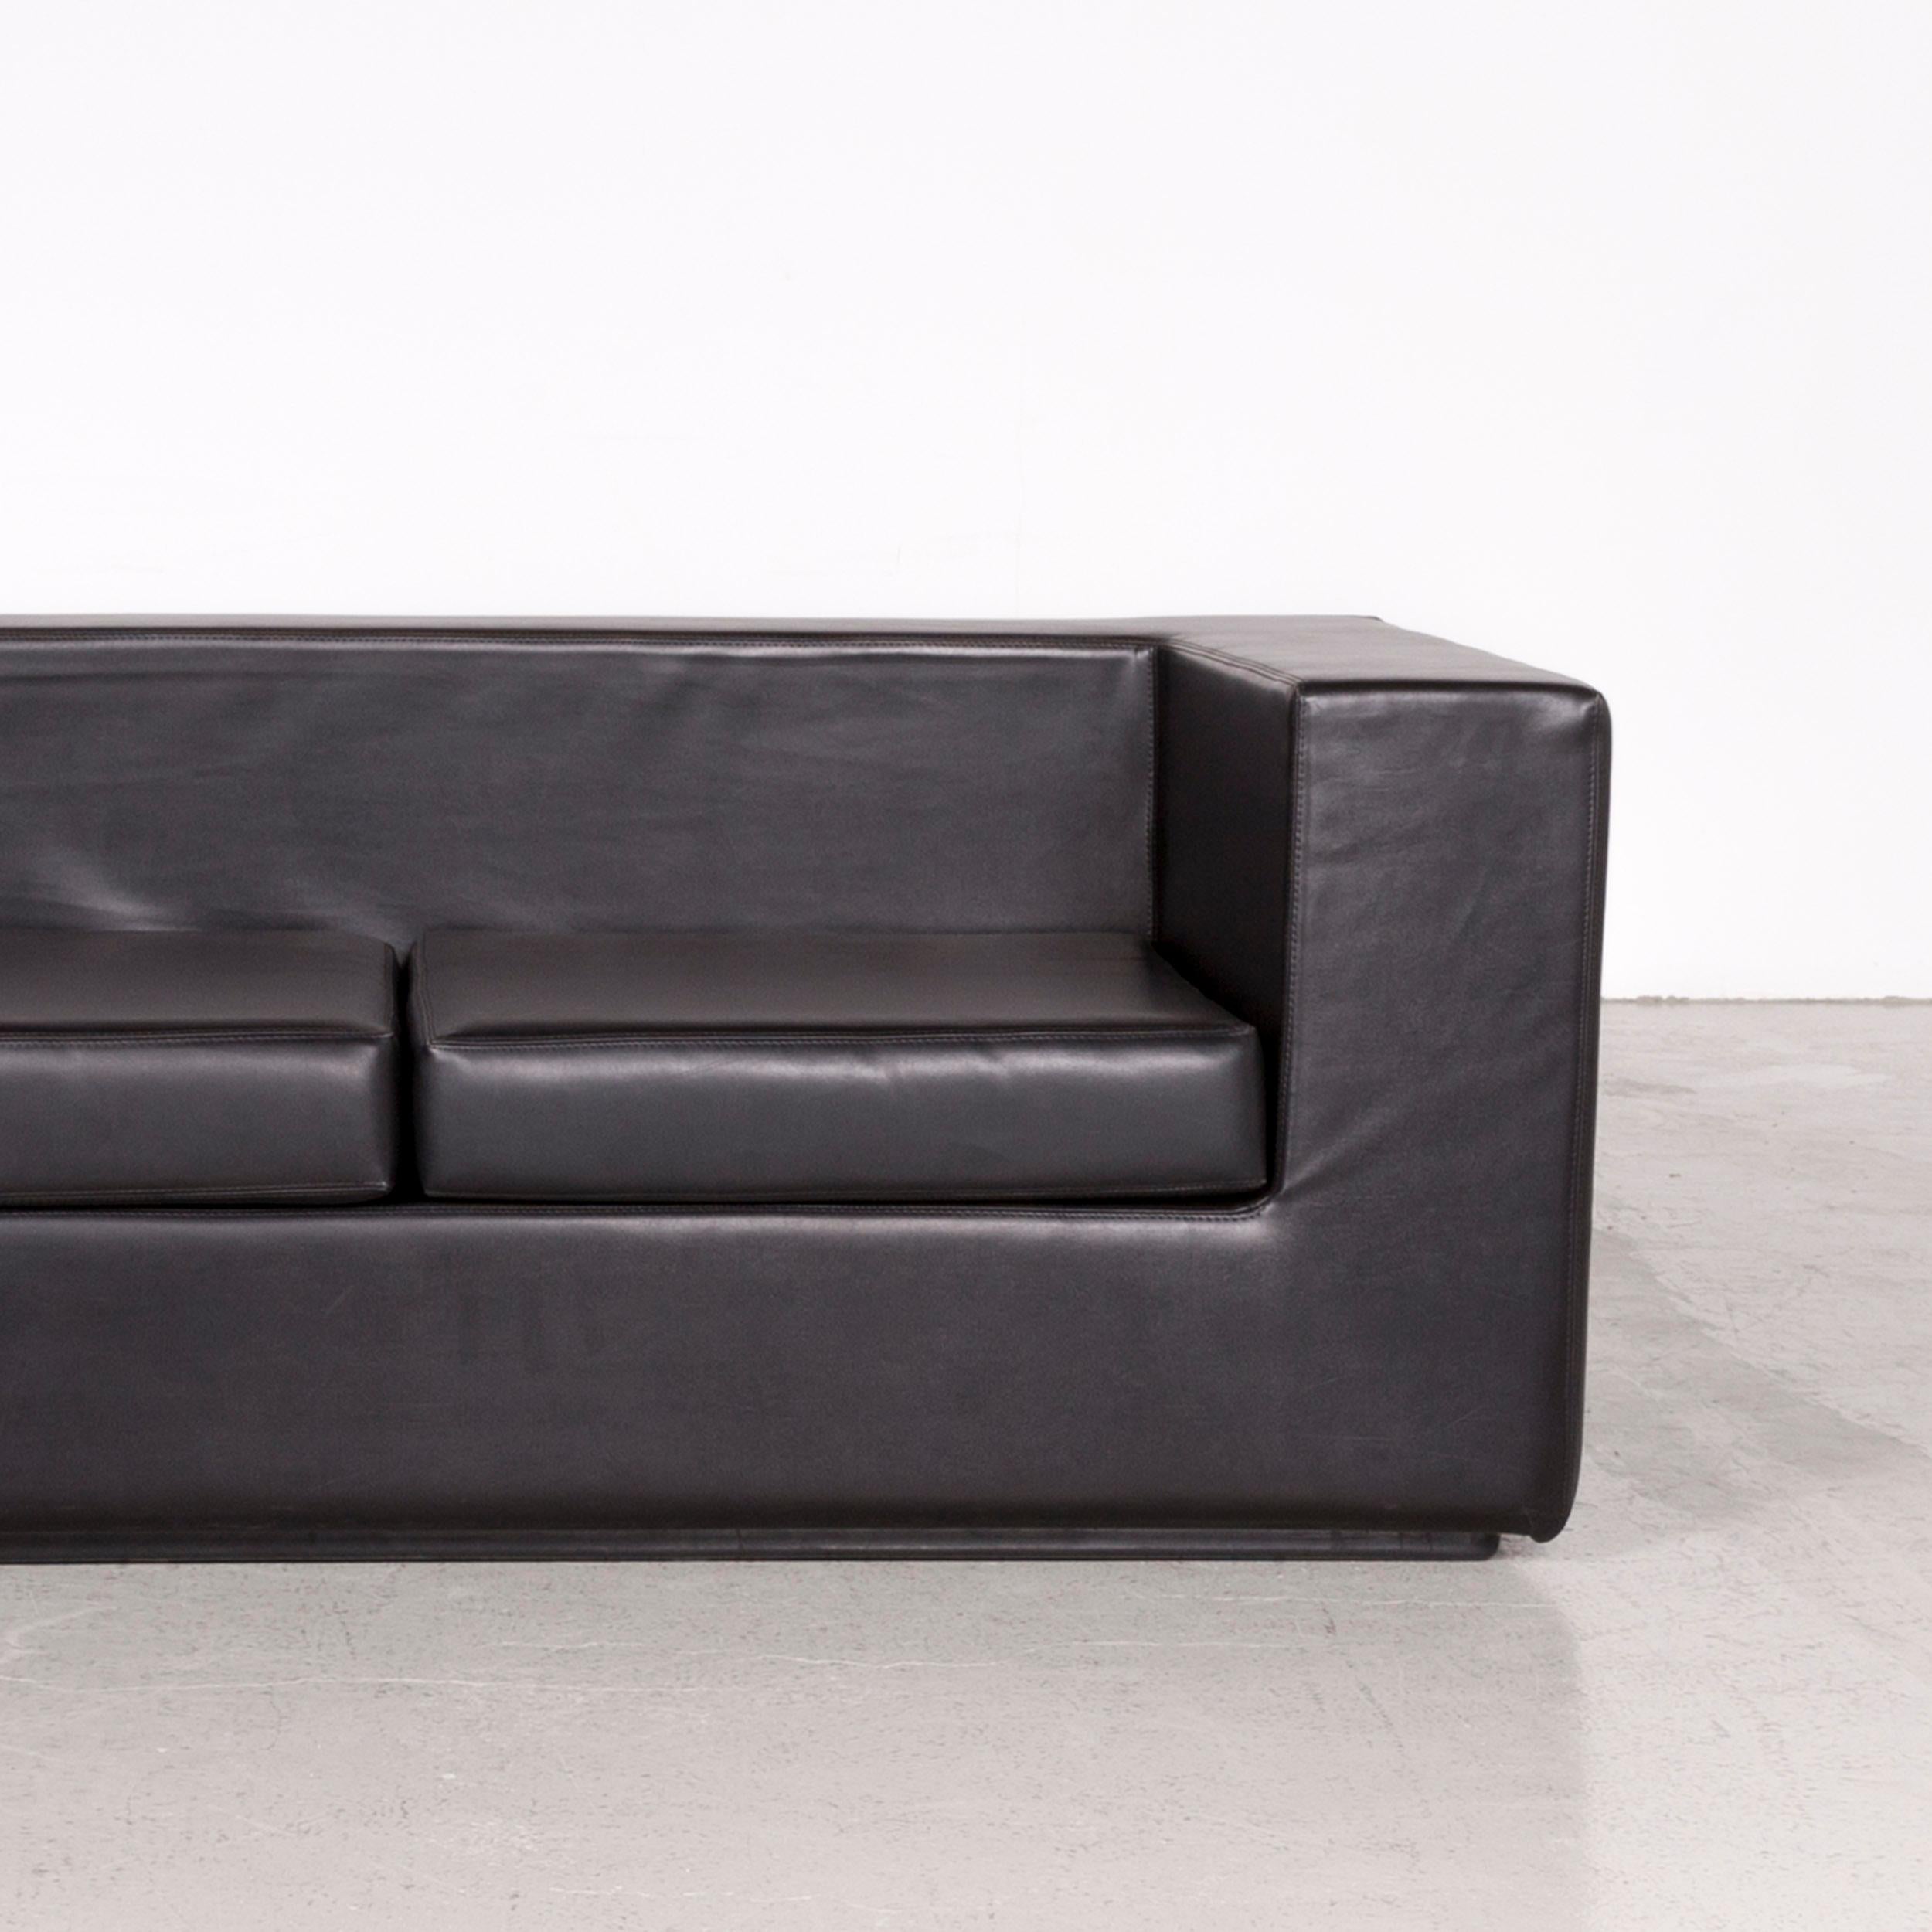 Italian Zanotta Throw Away Designer Leather Sofa Black by Willie Landels Real Leather